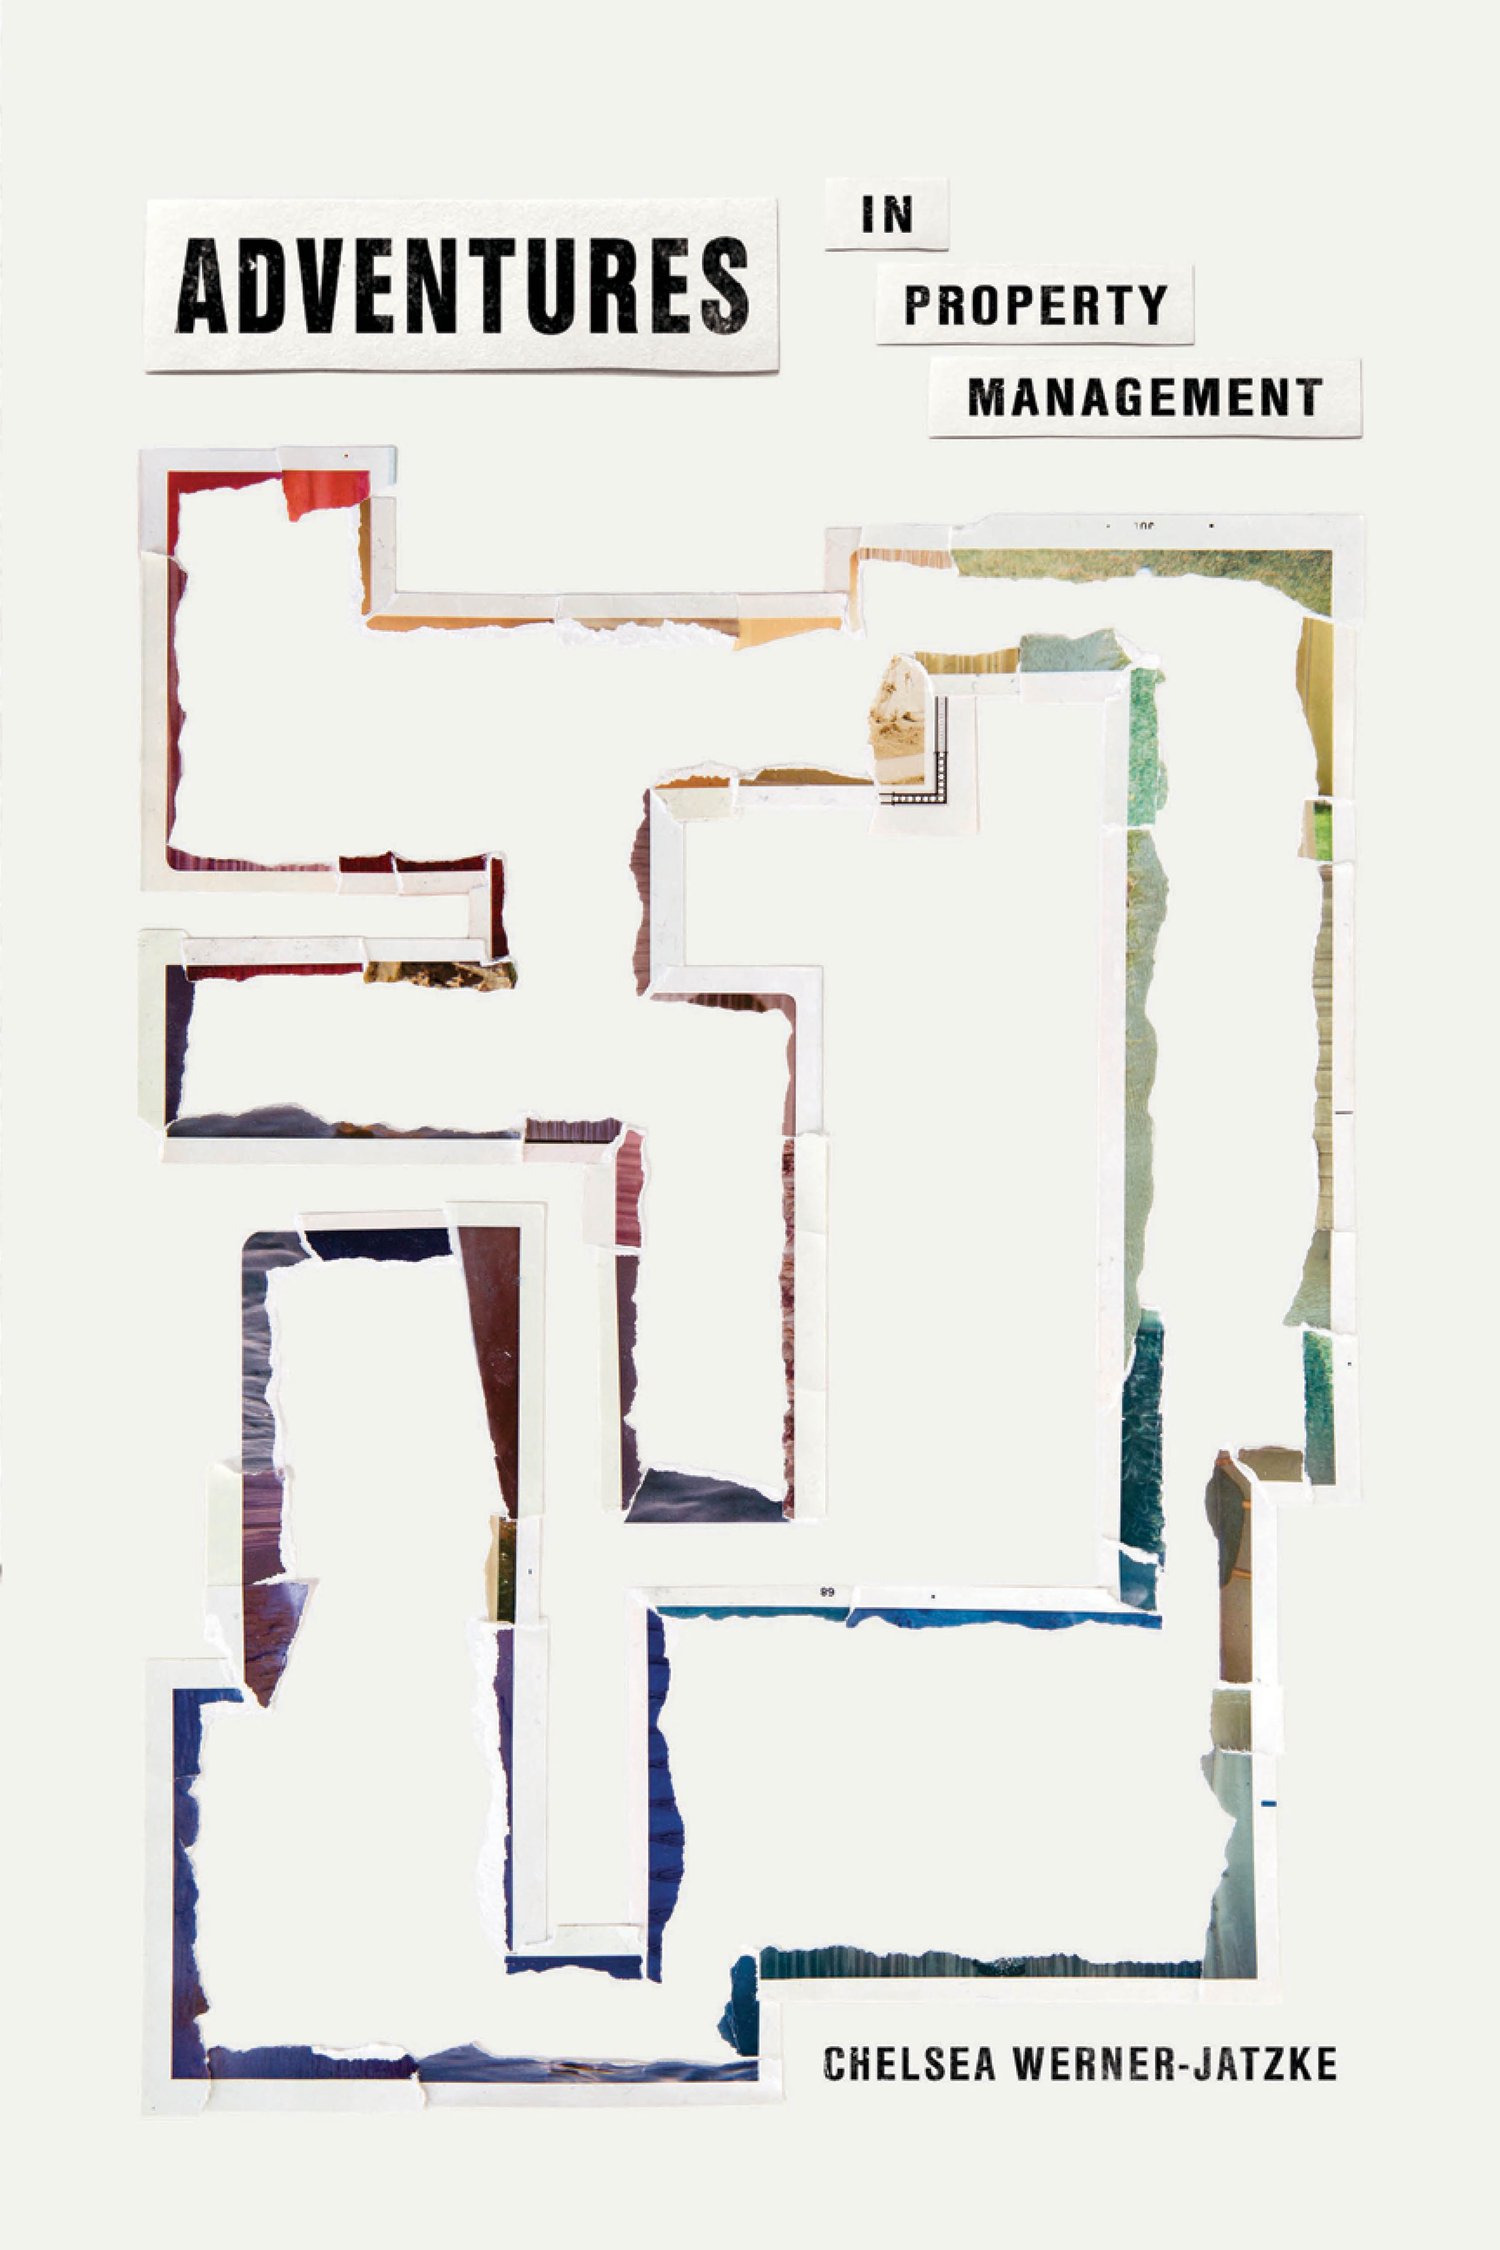 Image of Adventures in Property Management by Chelsea Werner-Jatzke